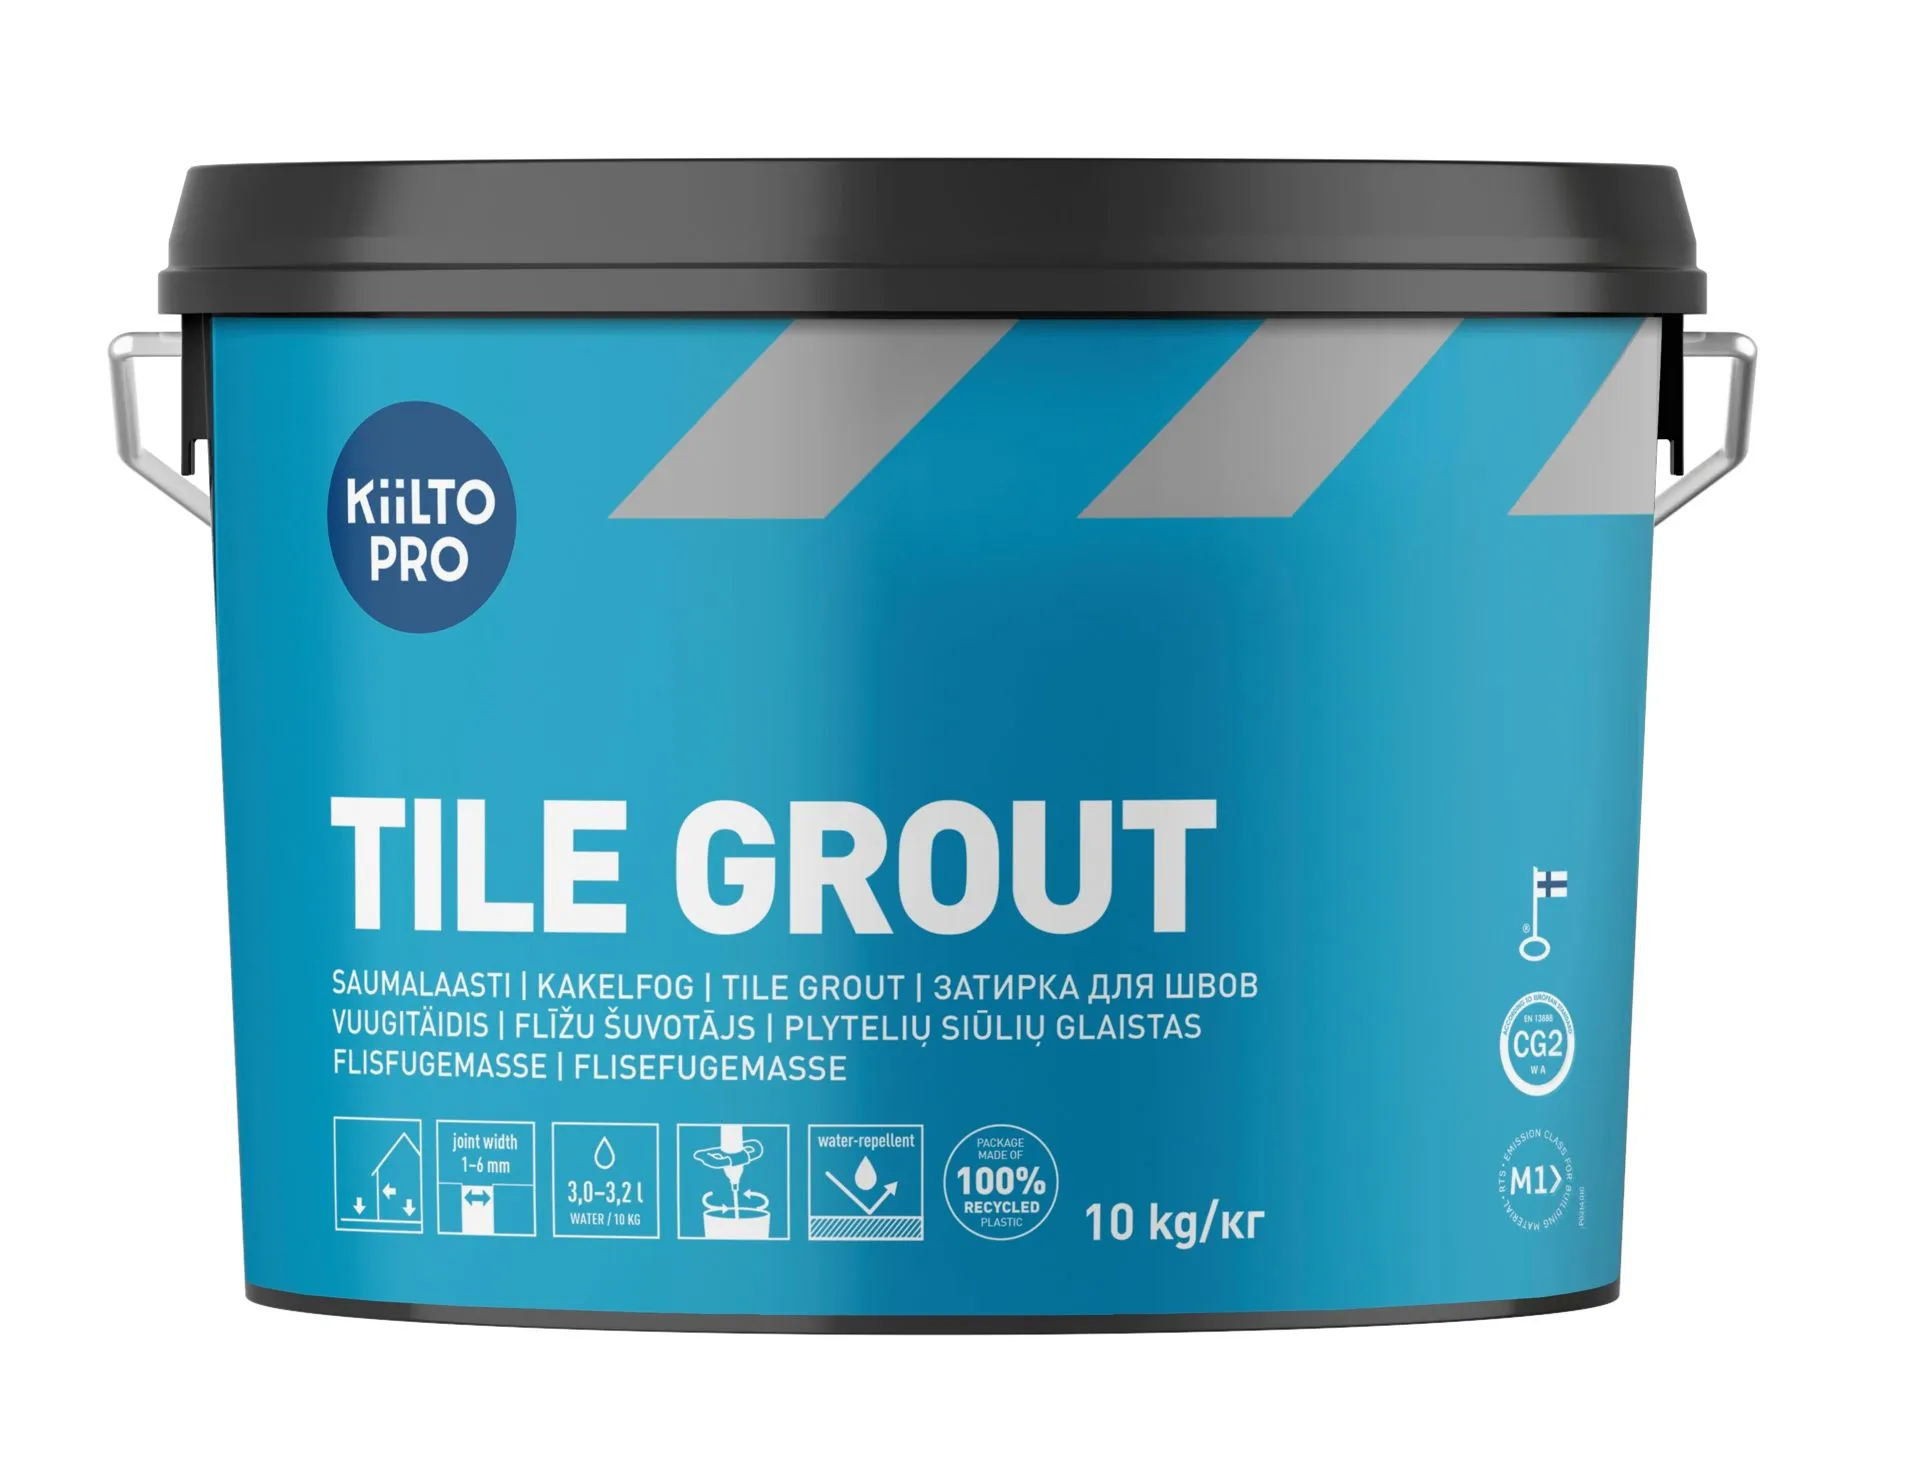 Kiilto Pro Tile grout saumalaasti 50 graphite black 10 kg